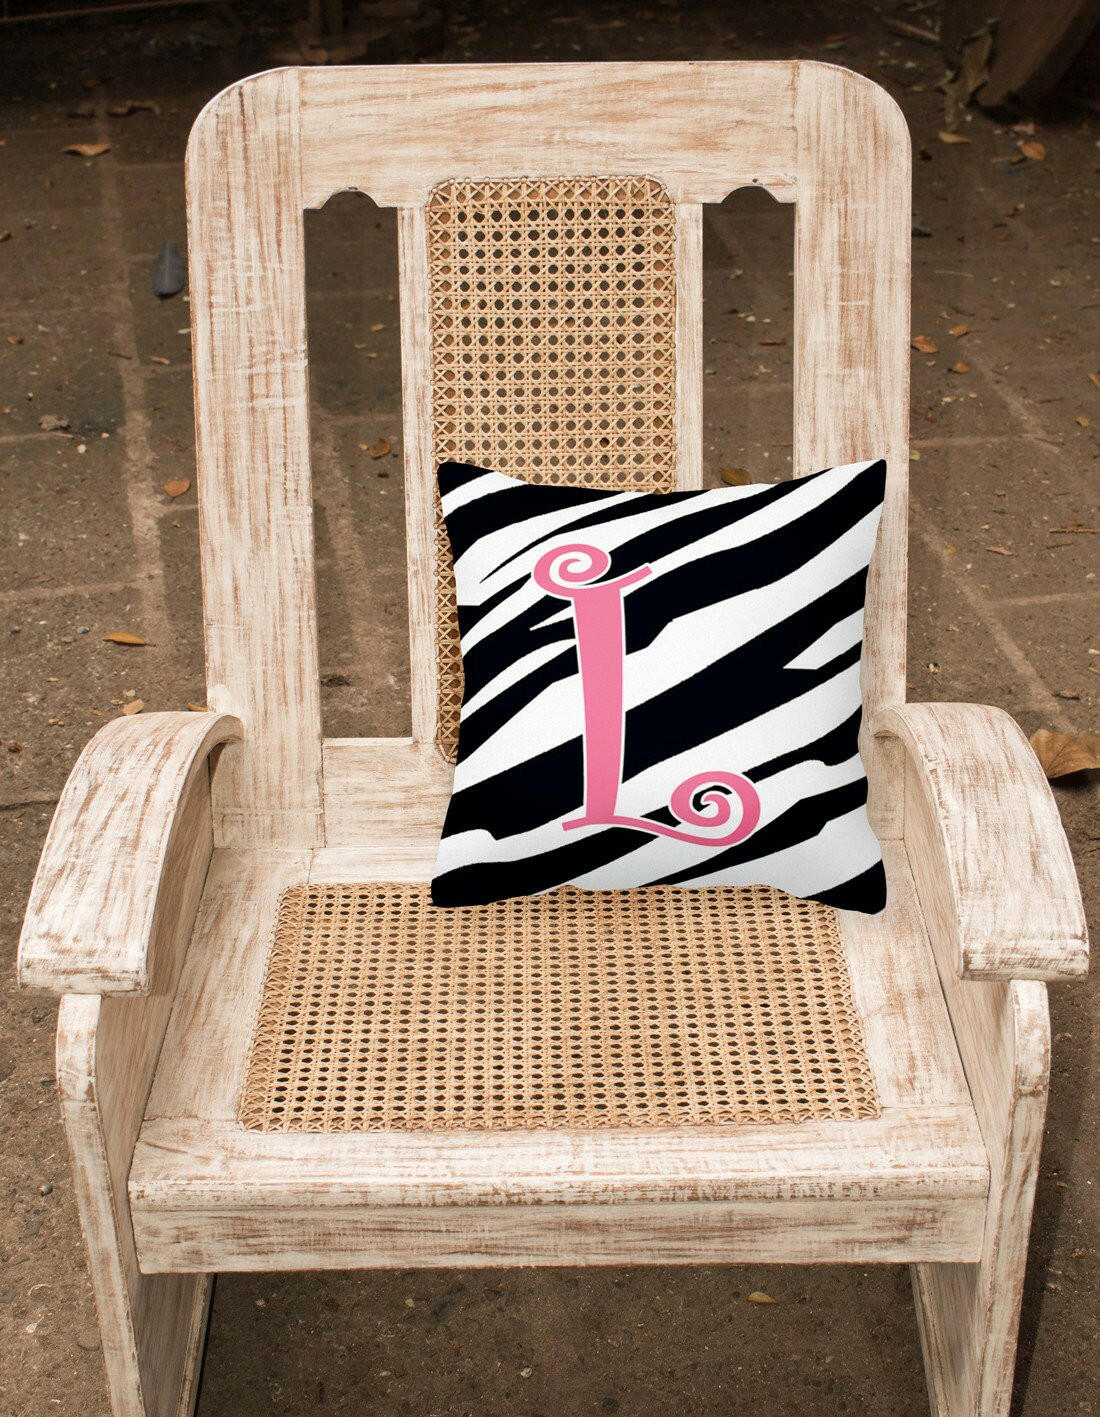 Monogram Initial L Zebra Stripe and Pink Decorative Canvas Fabric Pillow CJ1037 - the-store.com